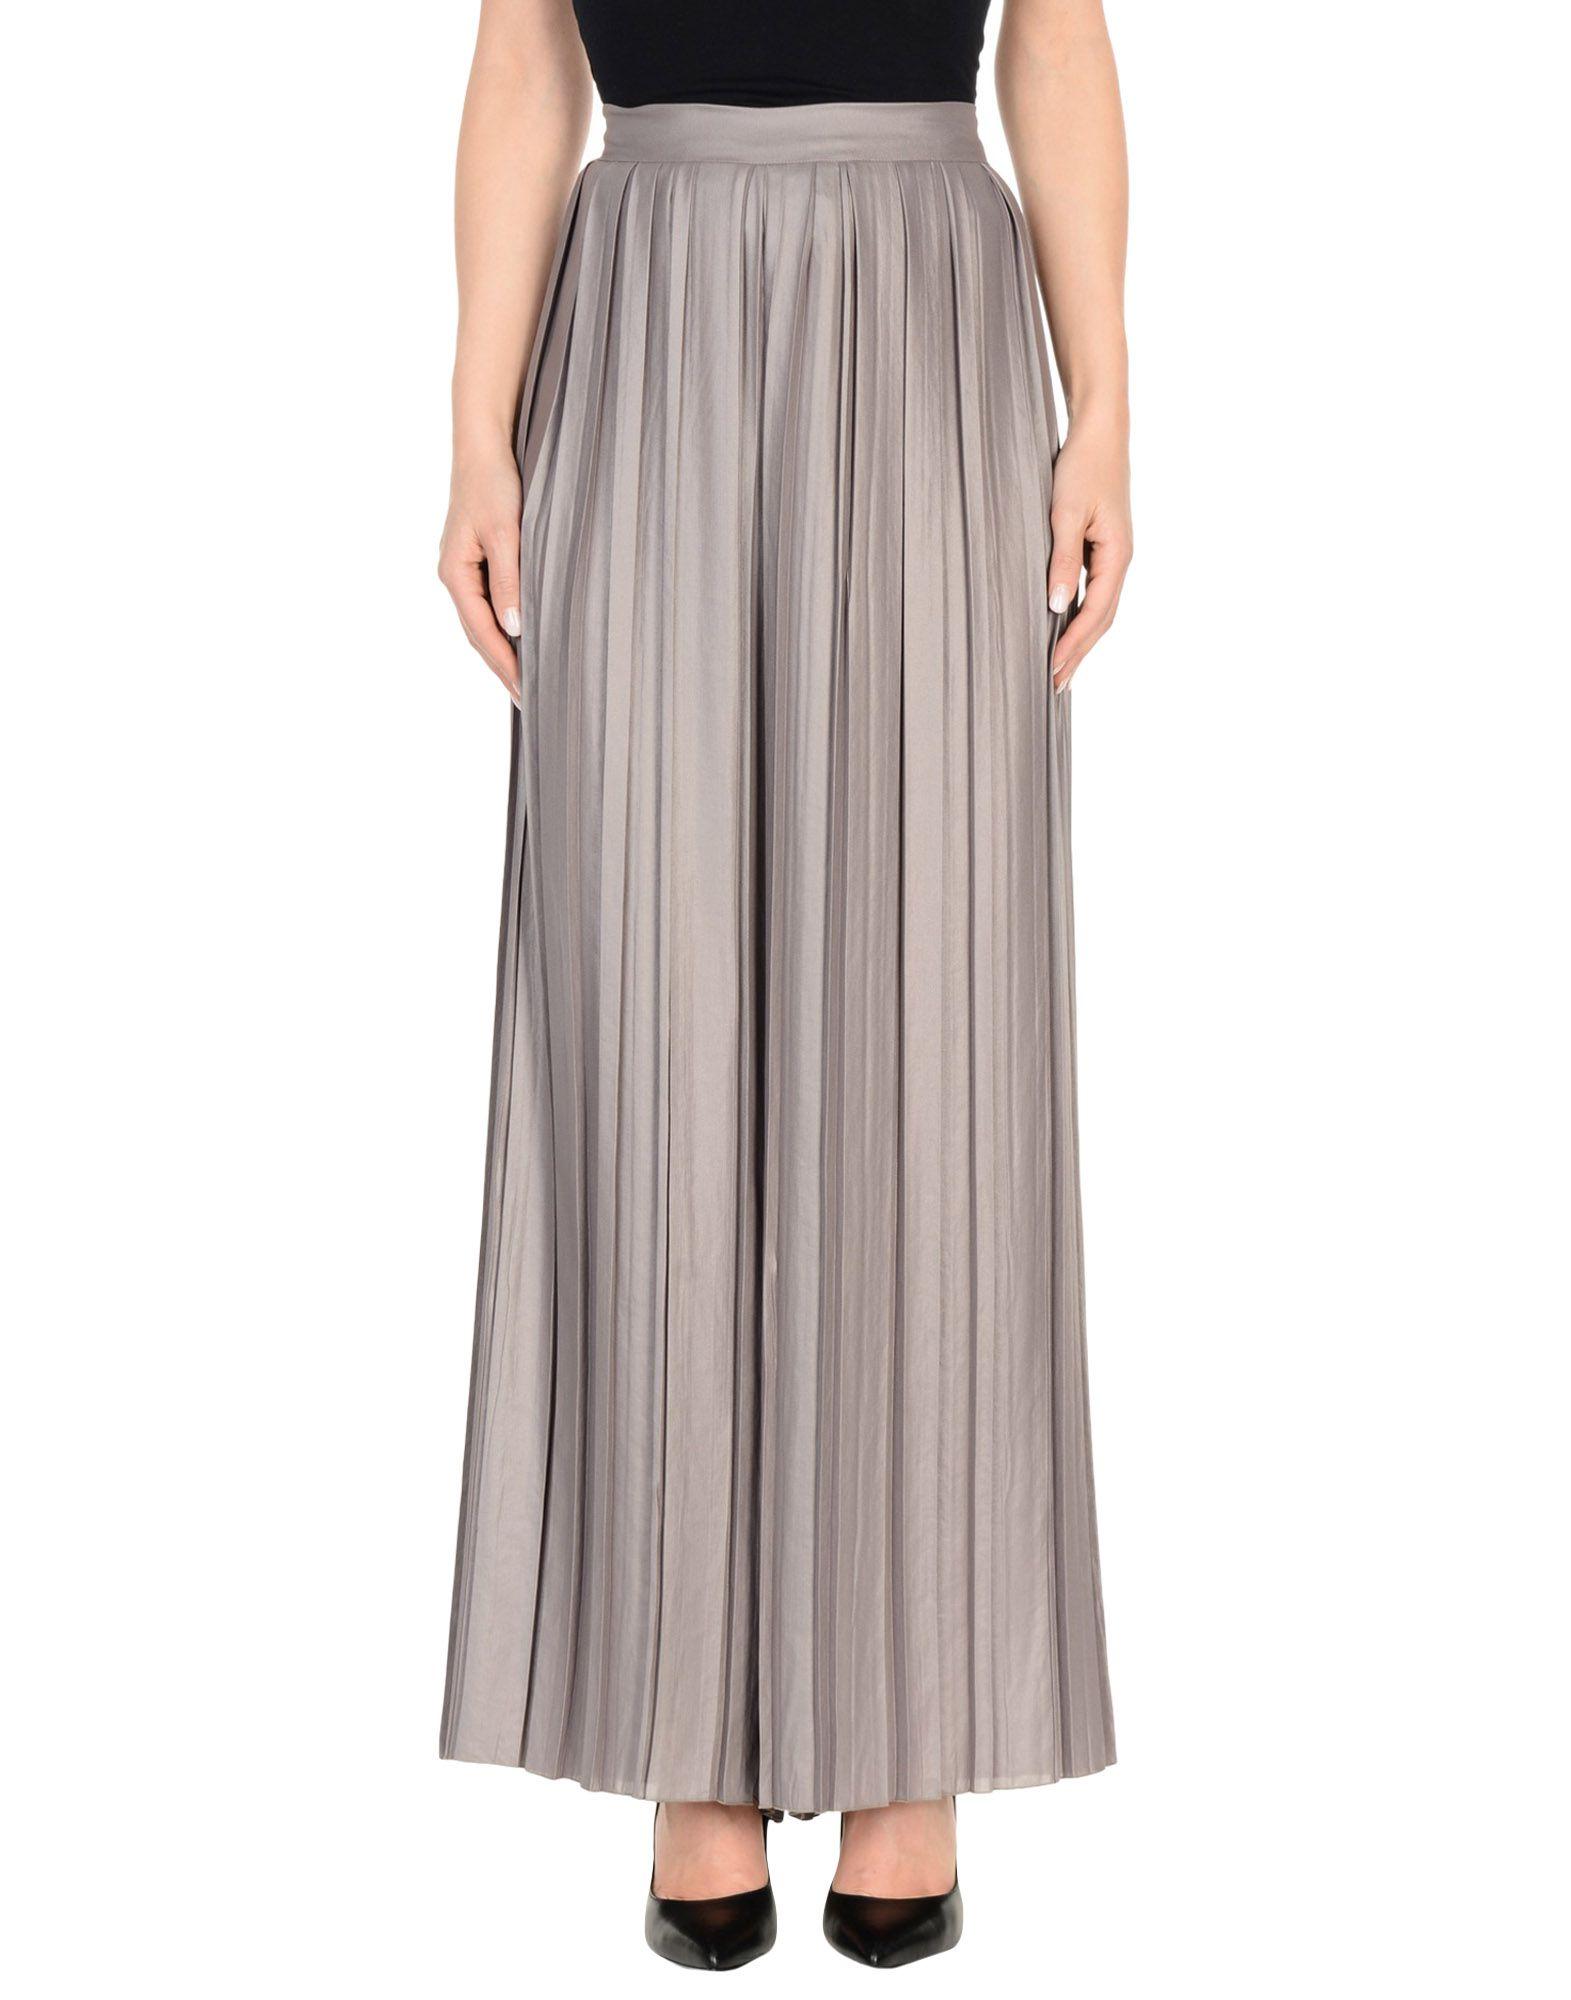 Golden Goose Deluxe Brand Long Skirt in Grey (Gray) - Lyst